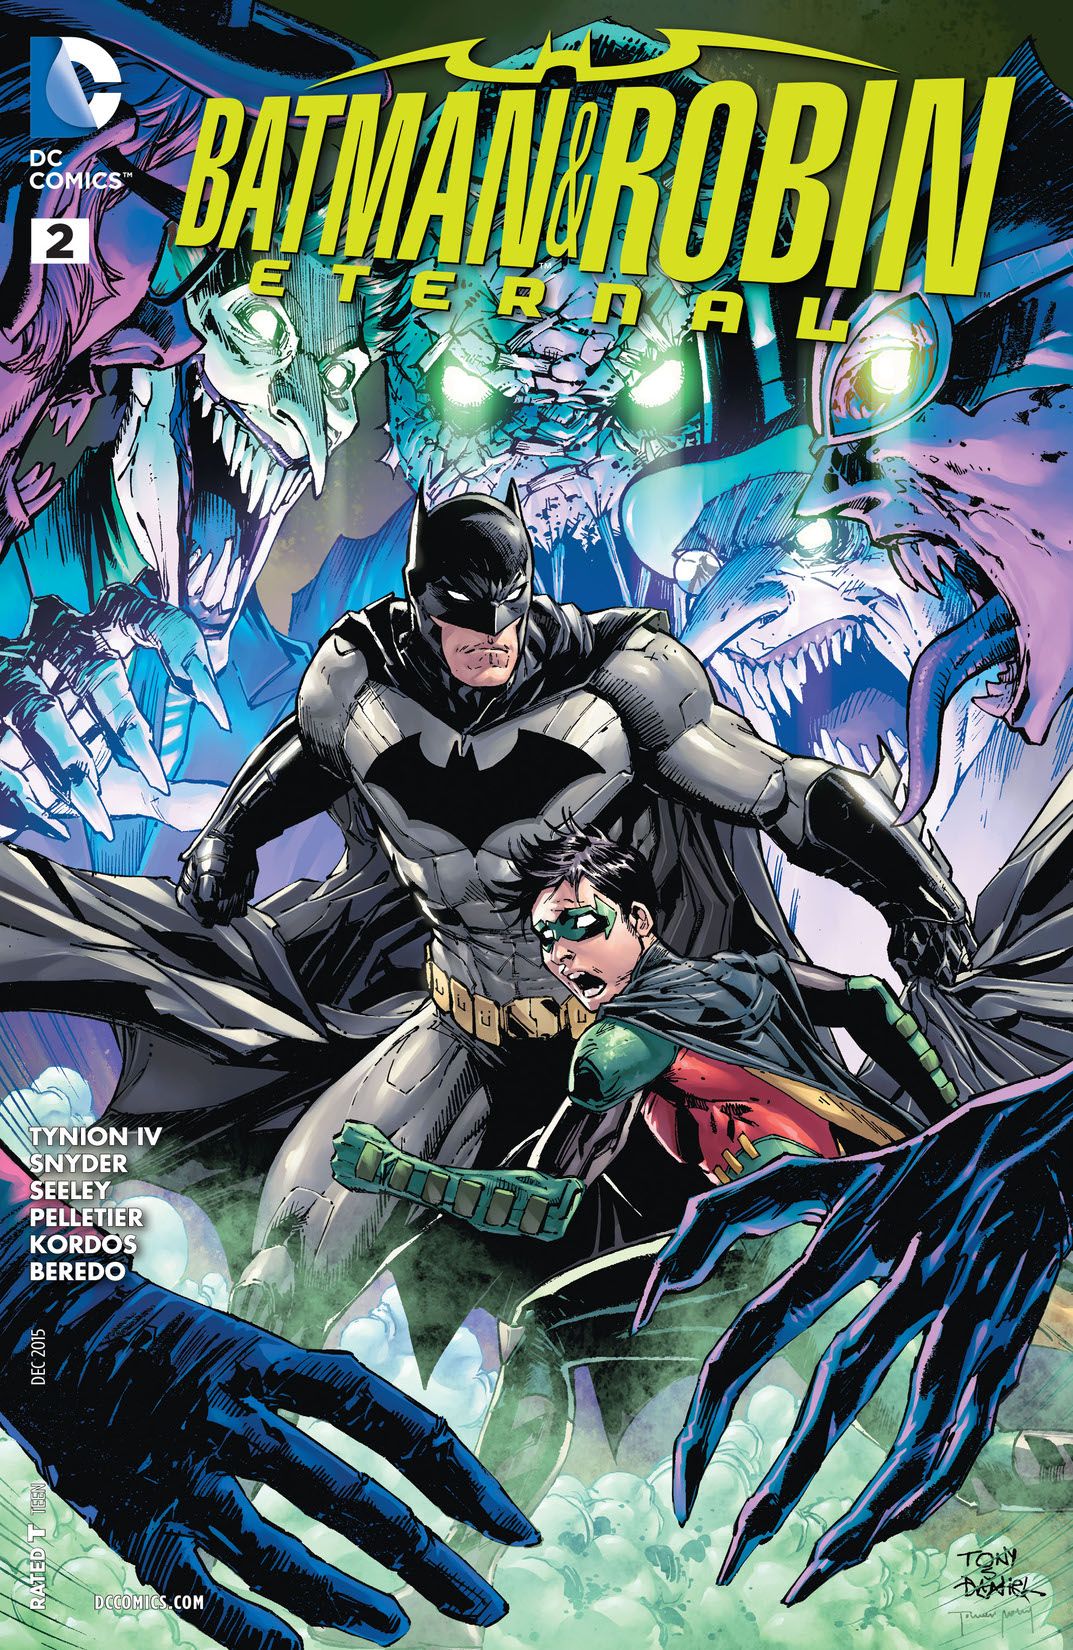 Batman & Robin Eternal #2 preview images